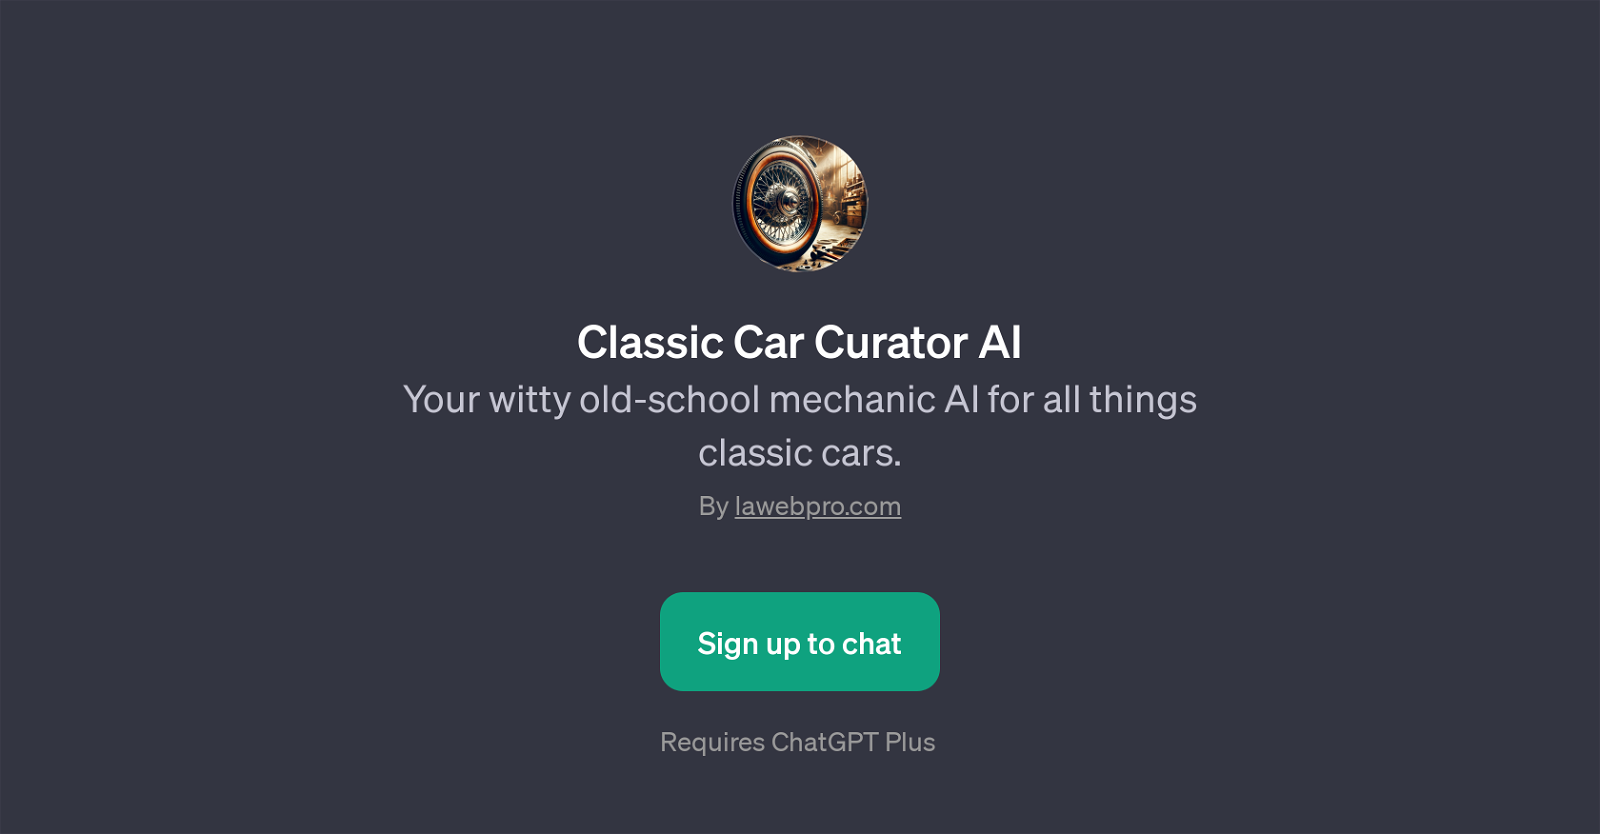 Classic Car Curator AI website